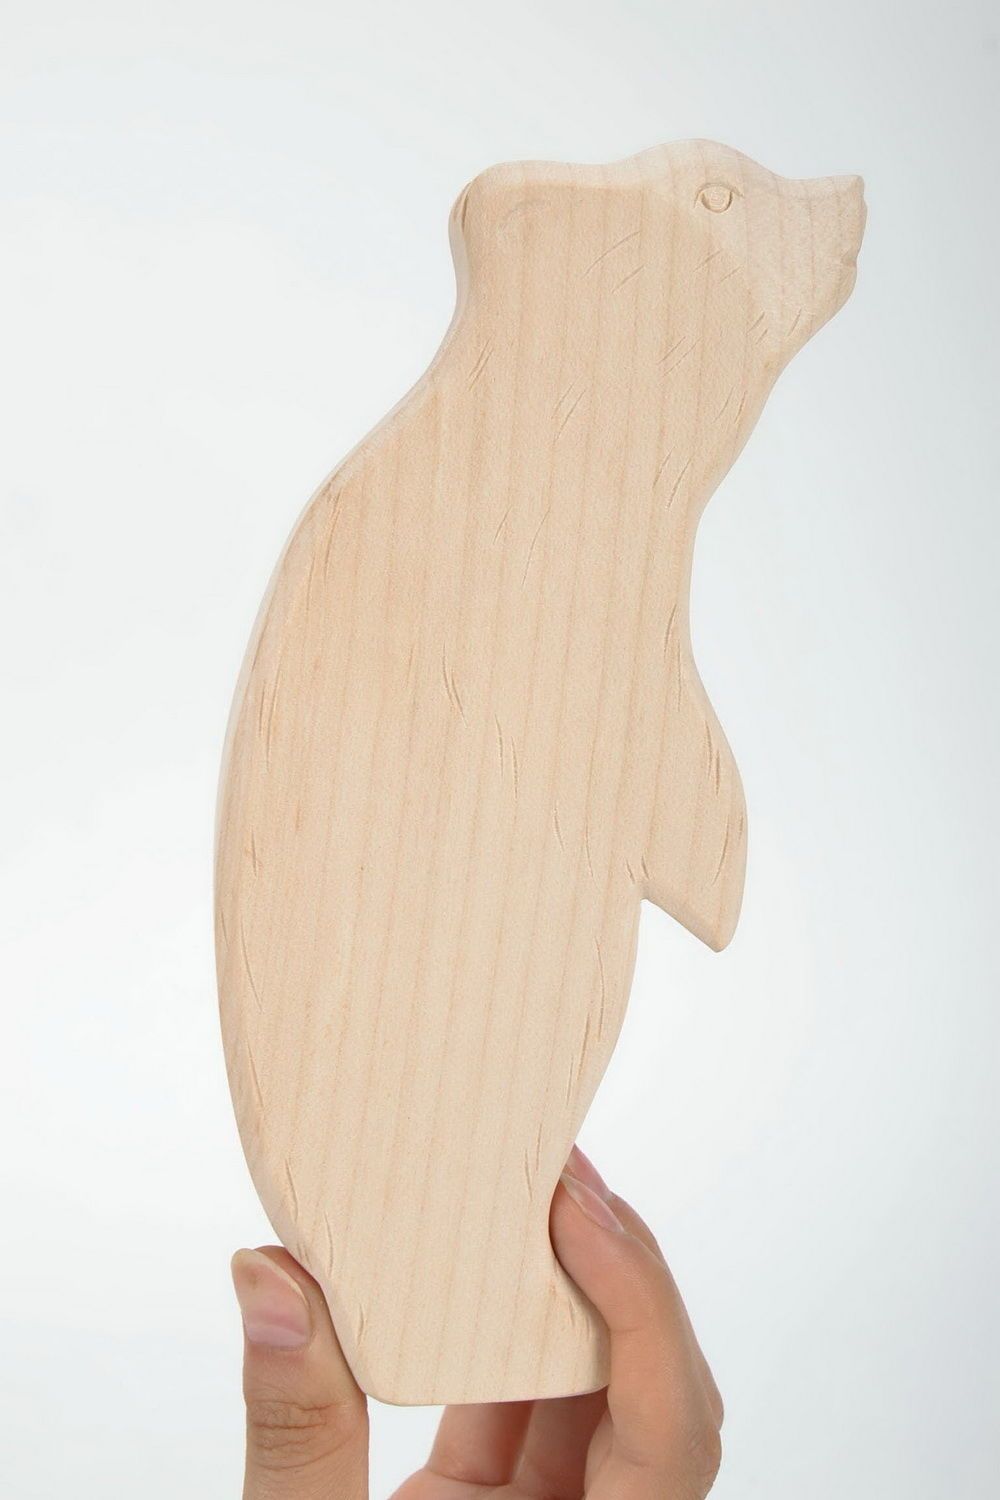 Figurine de bois faite main Grizzli photo 2